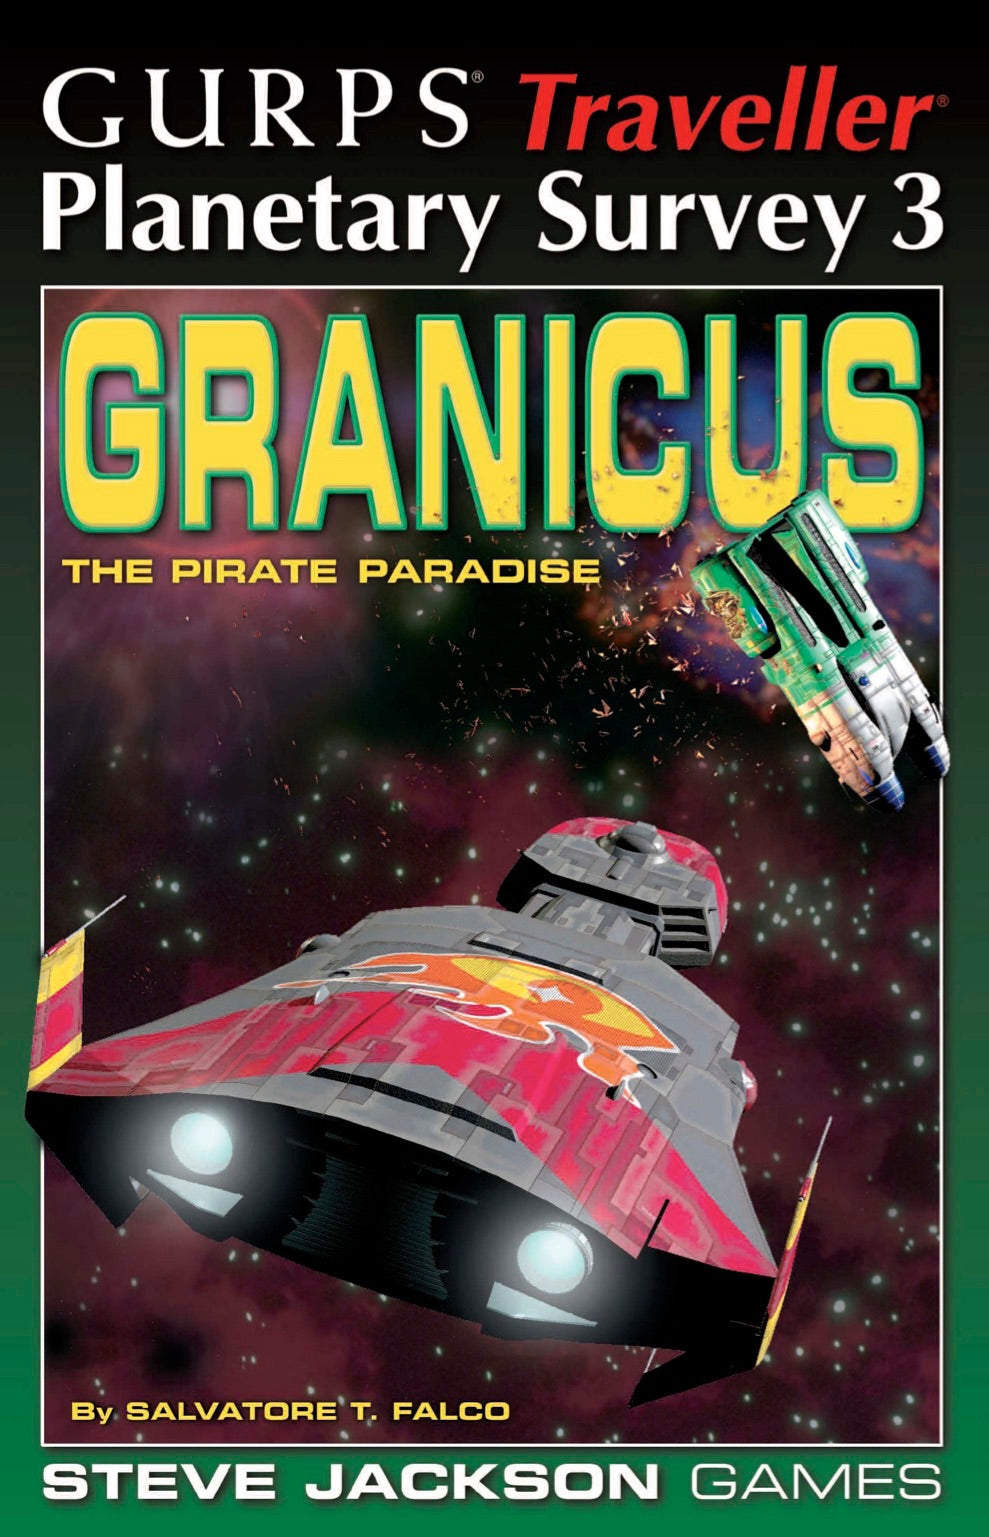 GURPS Traveller Classic: Planetary Survey 3 - Granicus